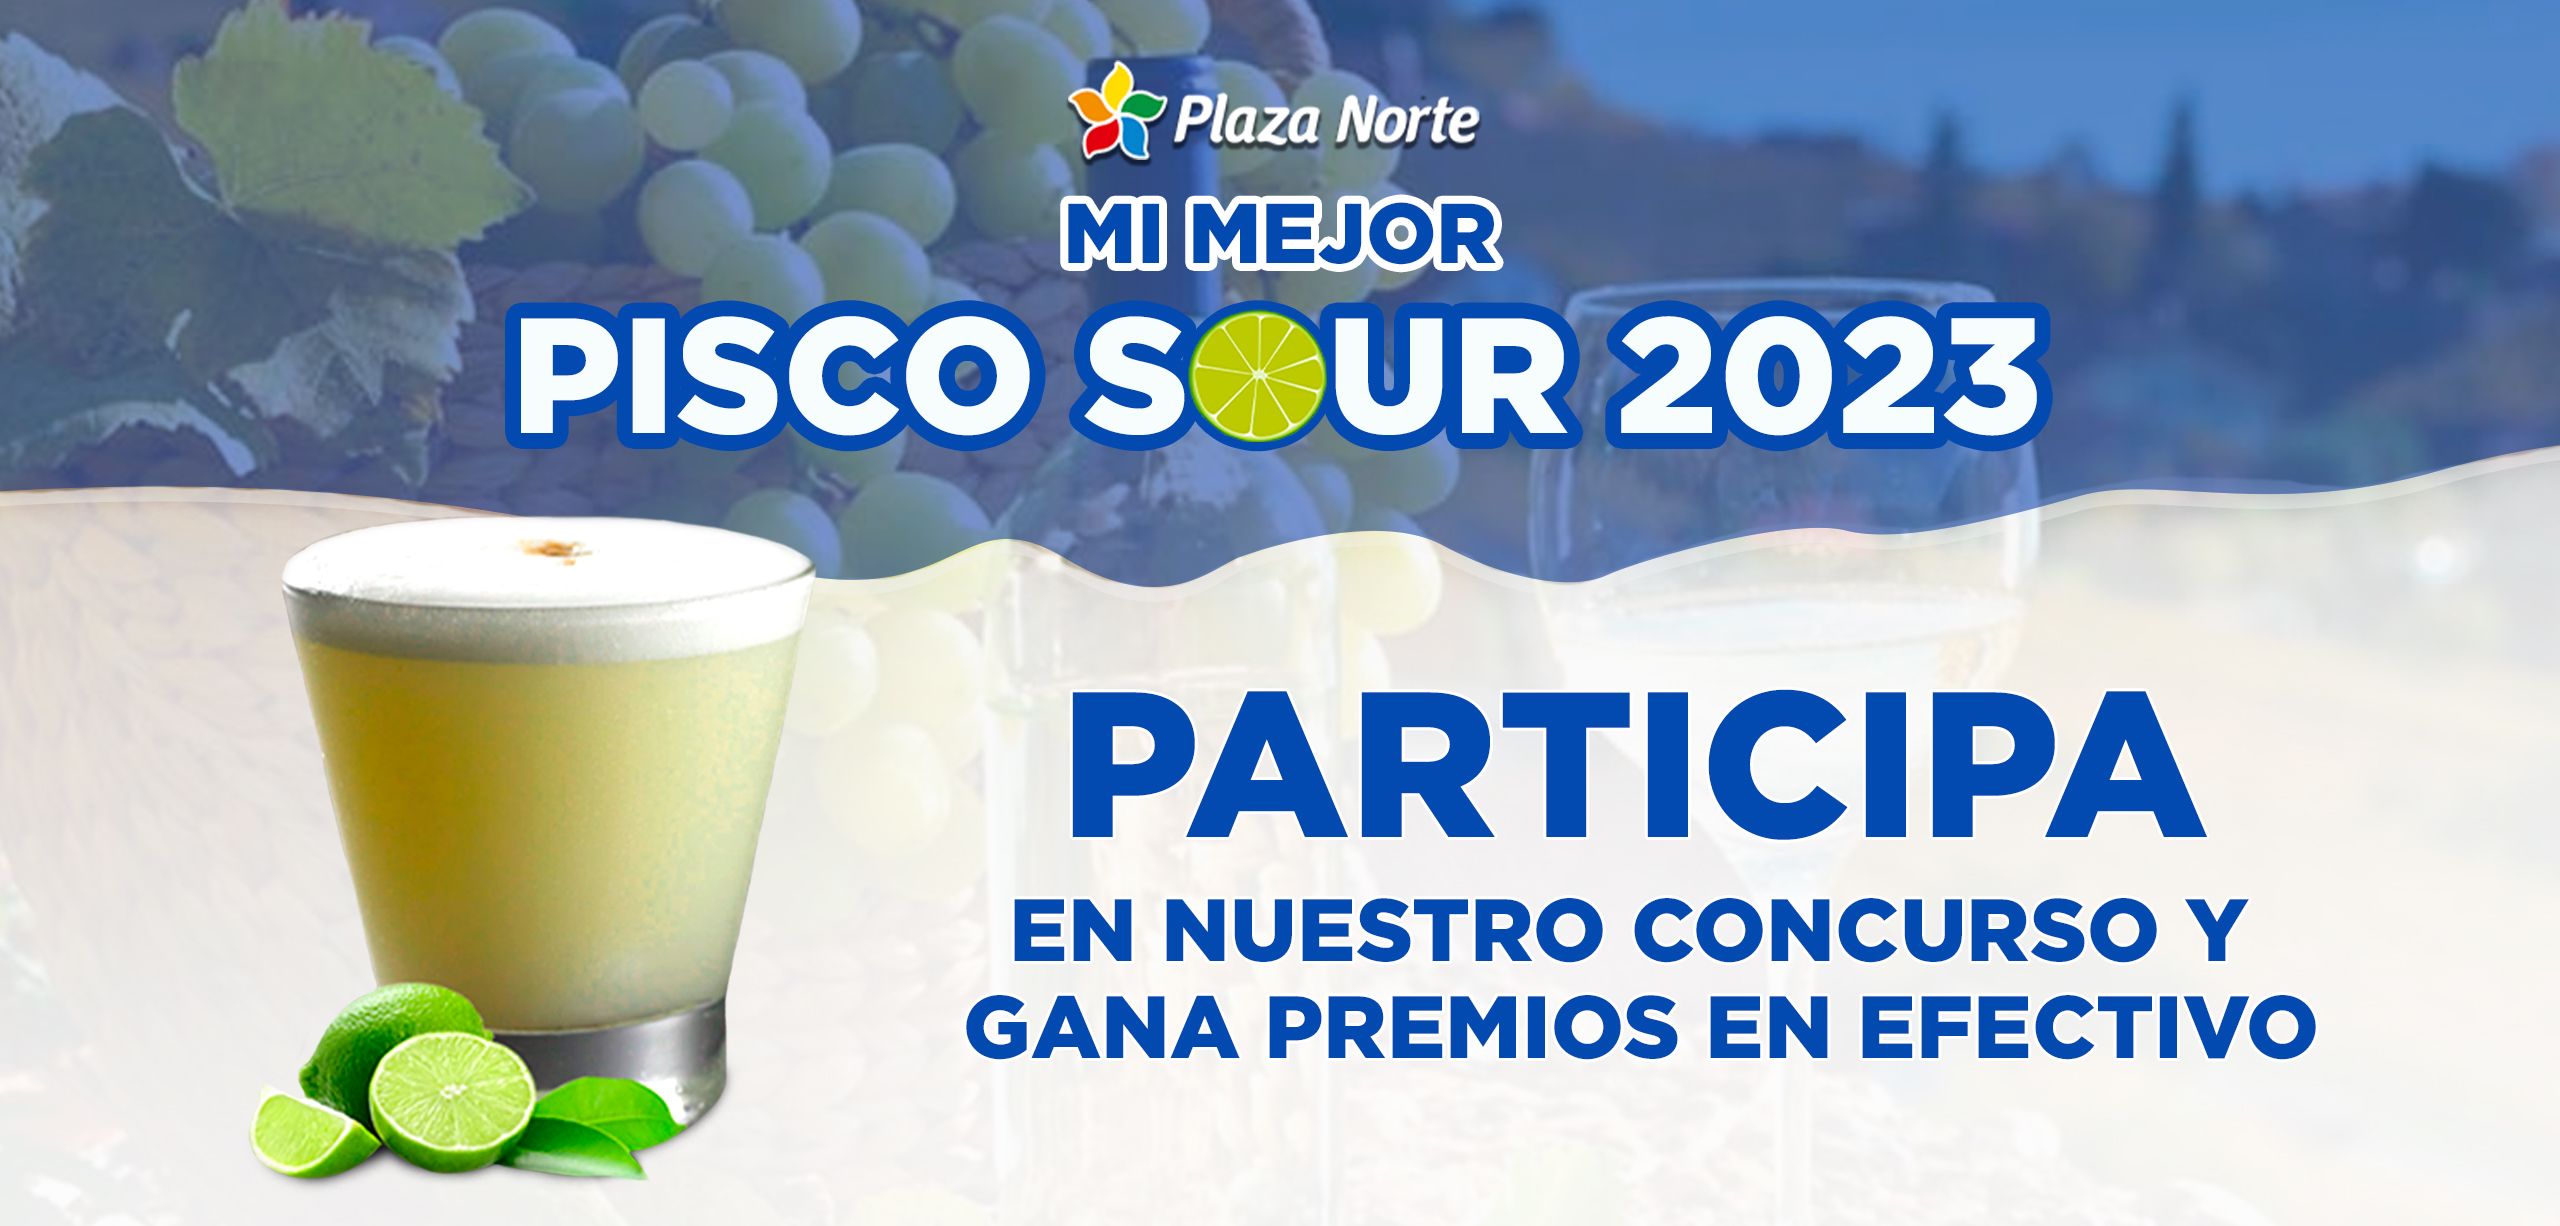 CONCURSO: MI MEJOR PISCO SOUR 2023 - Plaza Norte